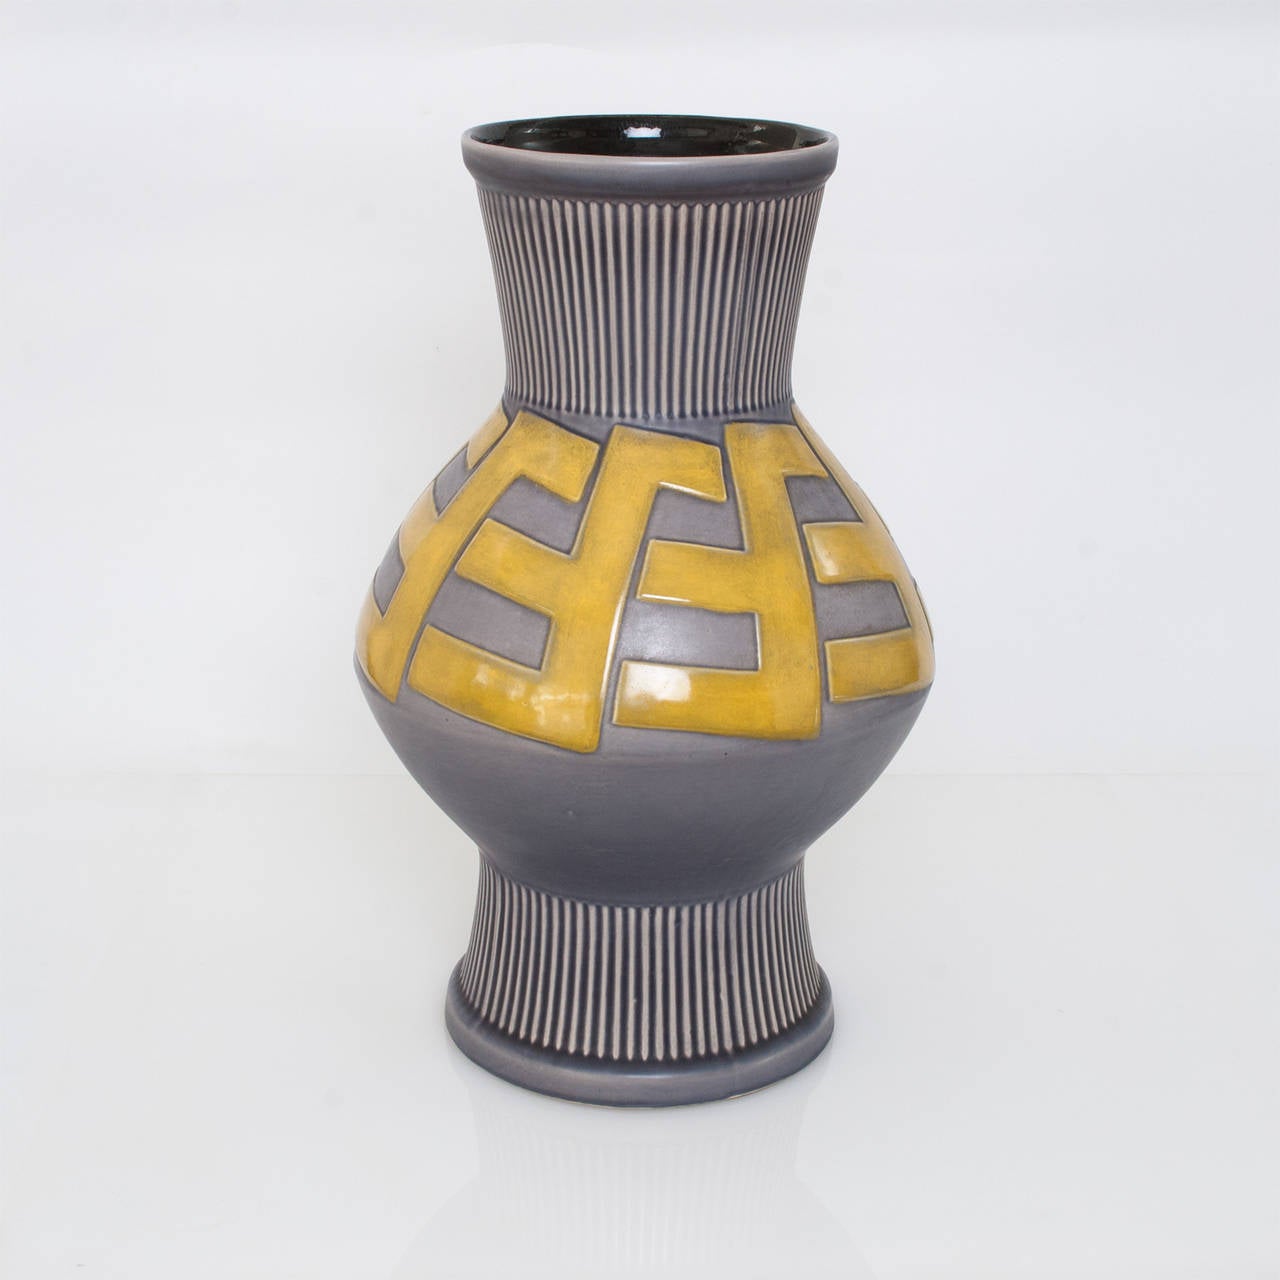 Swedish Art Deco ceramic vase with a raised bold pattern in a golden glaze on a grey or blue background. Designed by artist Ewald Dahlskog for Bo Fajans, circa 1930.